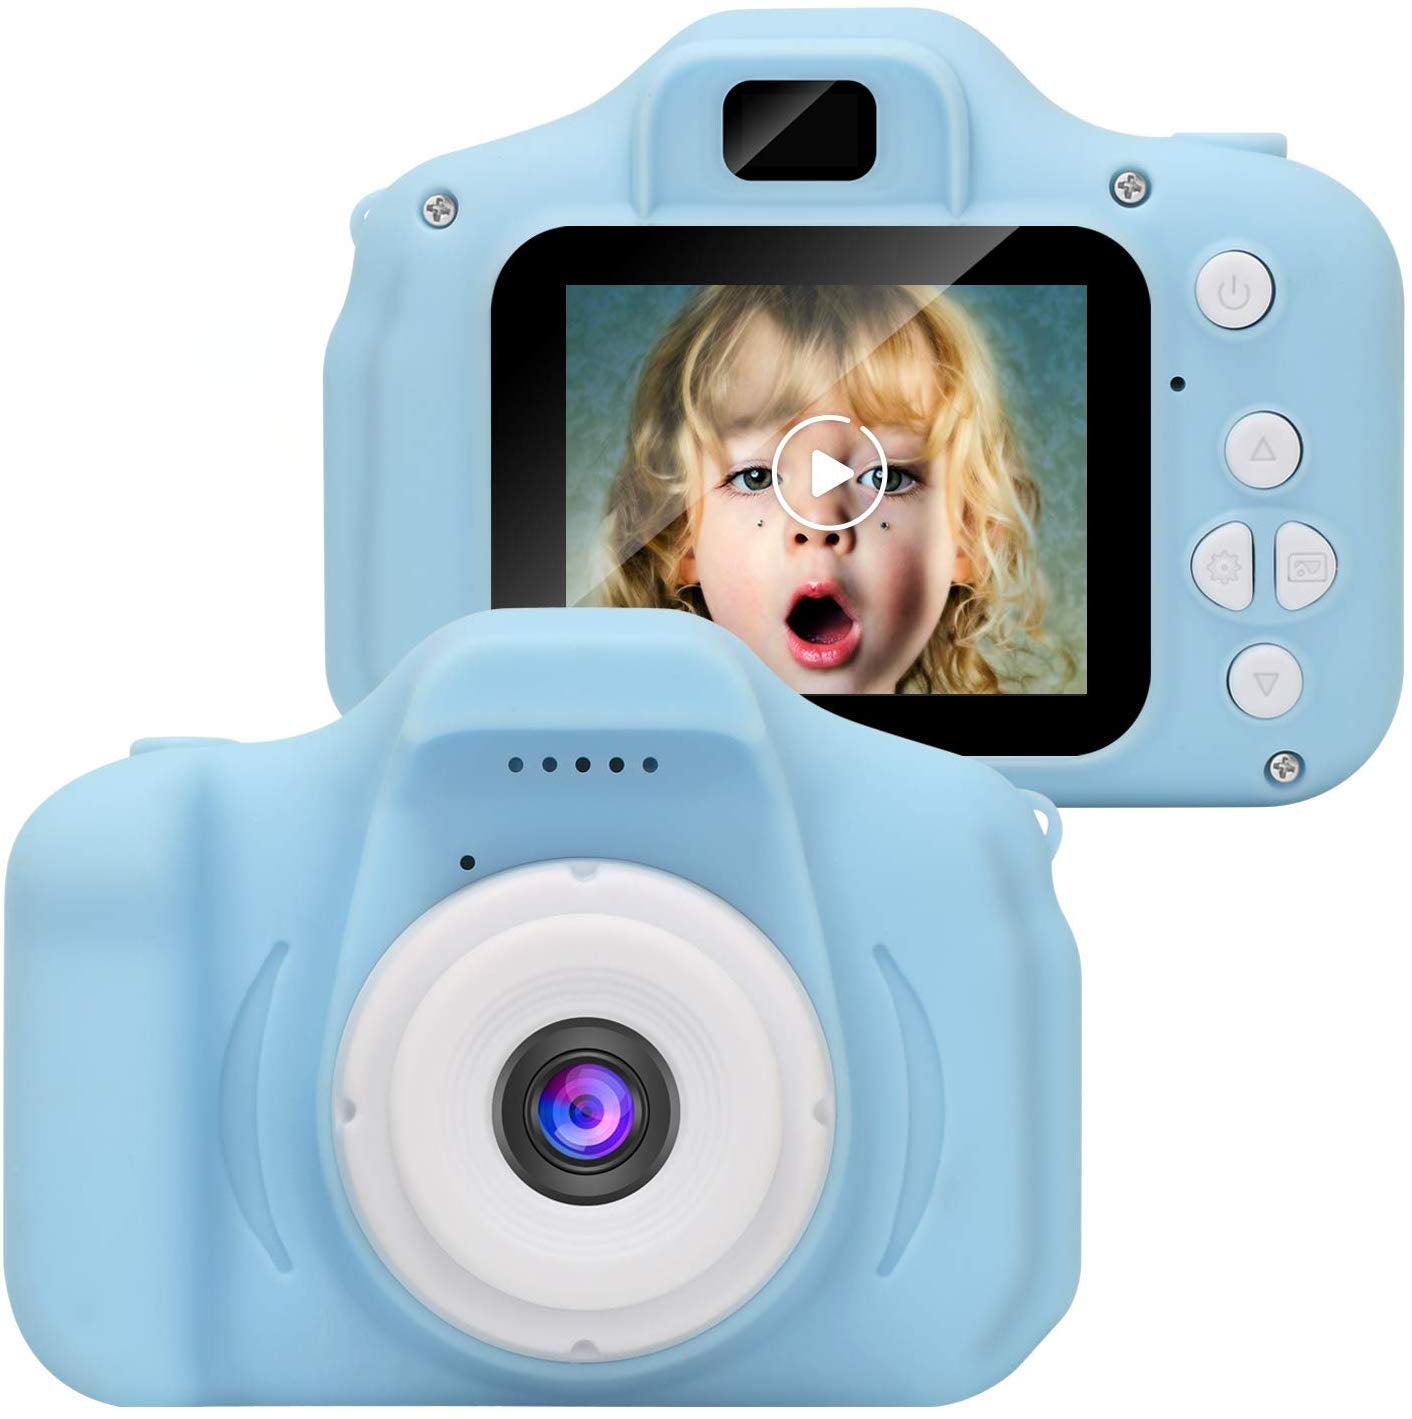 Mini Digital Kids Camera in 3 Colors